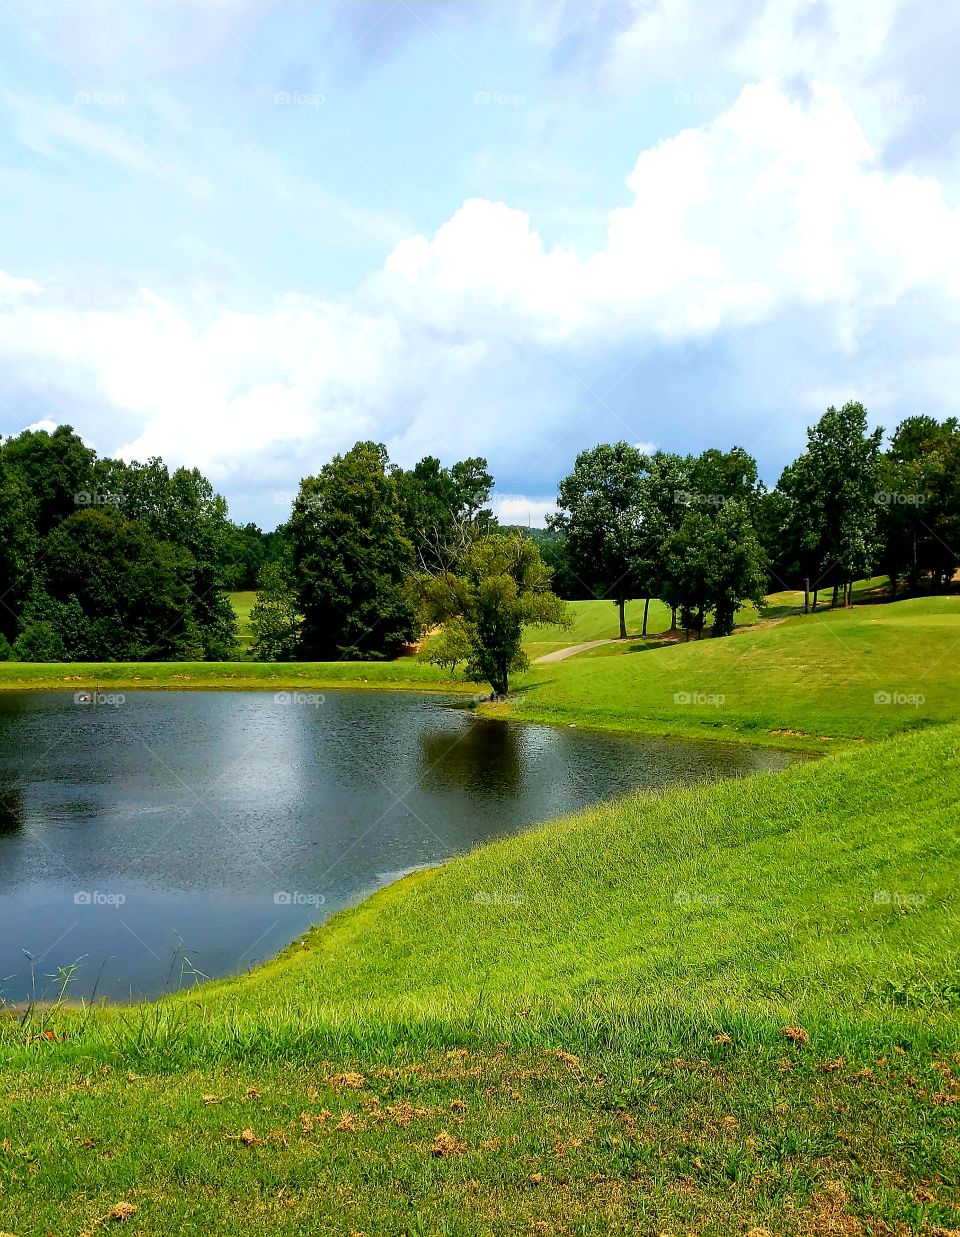 Georgia Golf Course